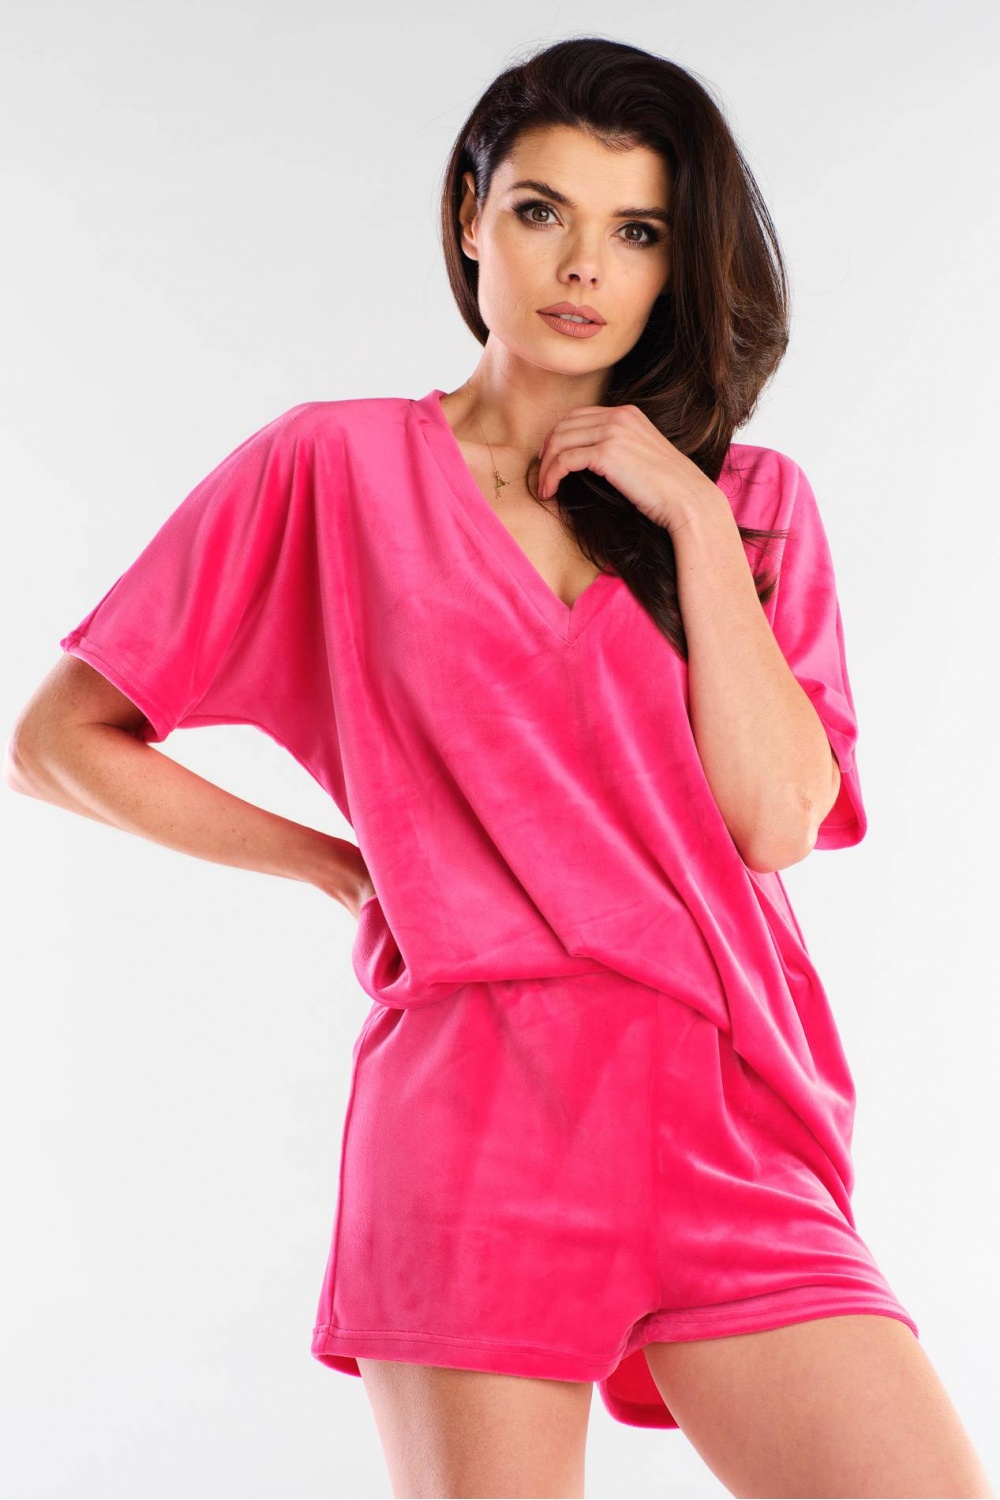  Shorts model 154792 awama  pink